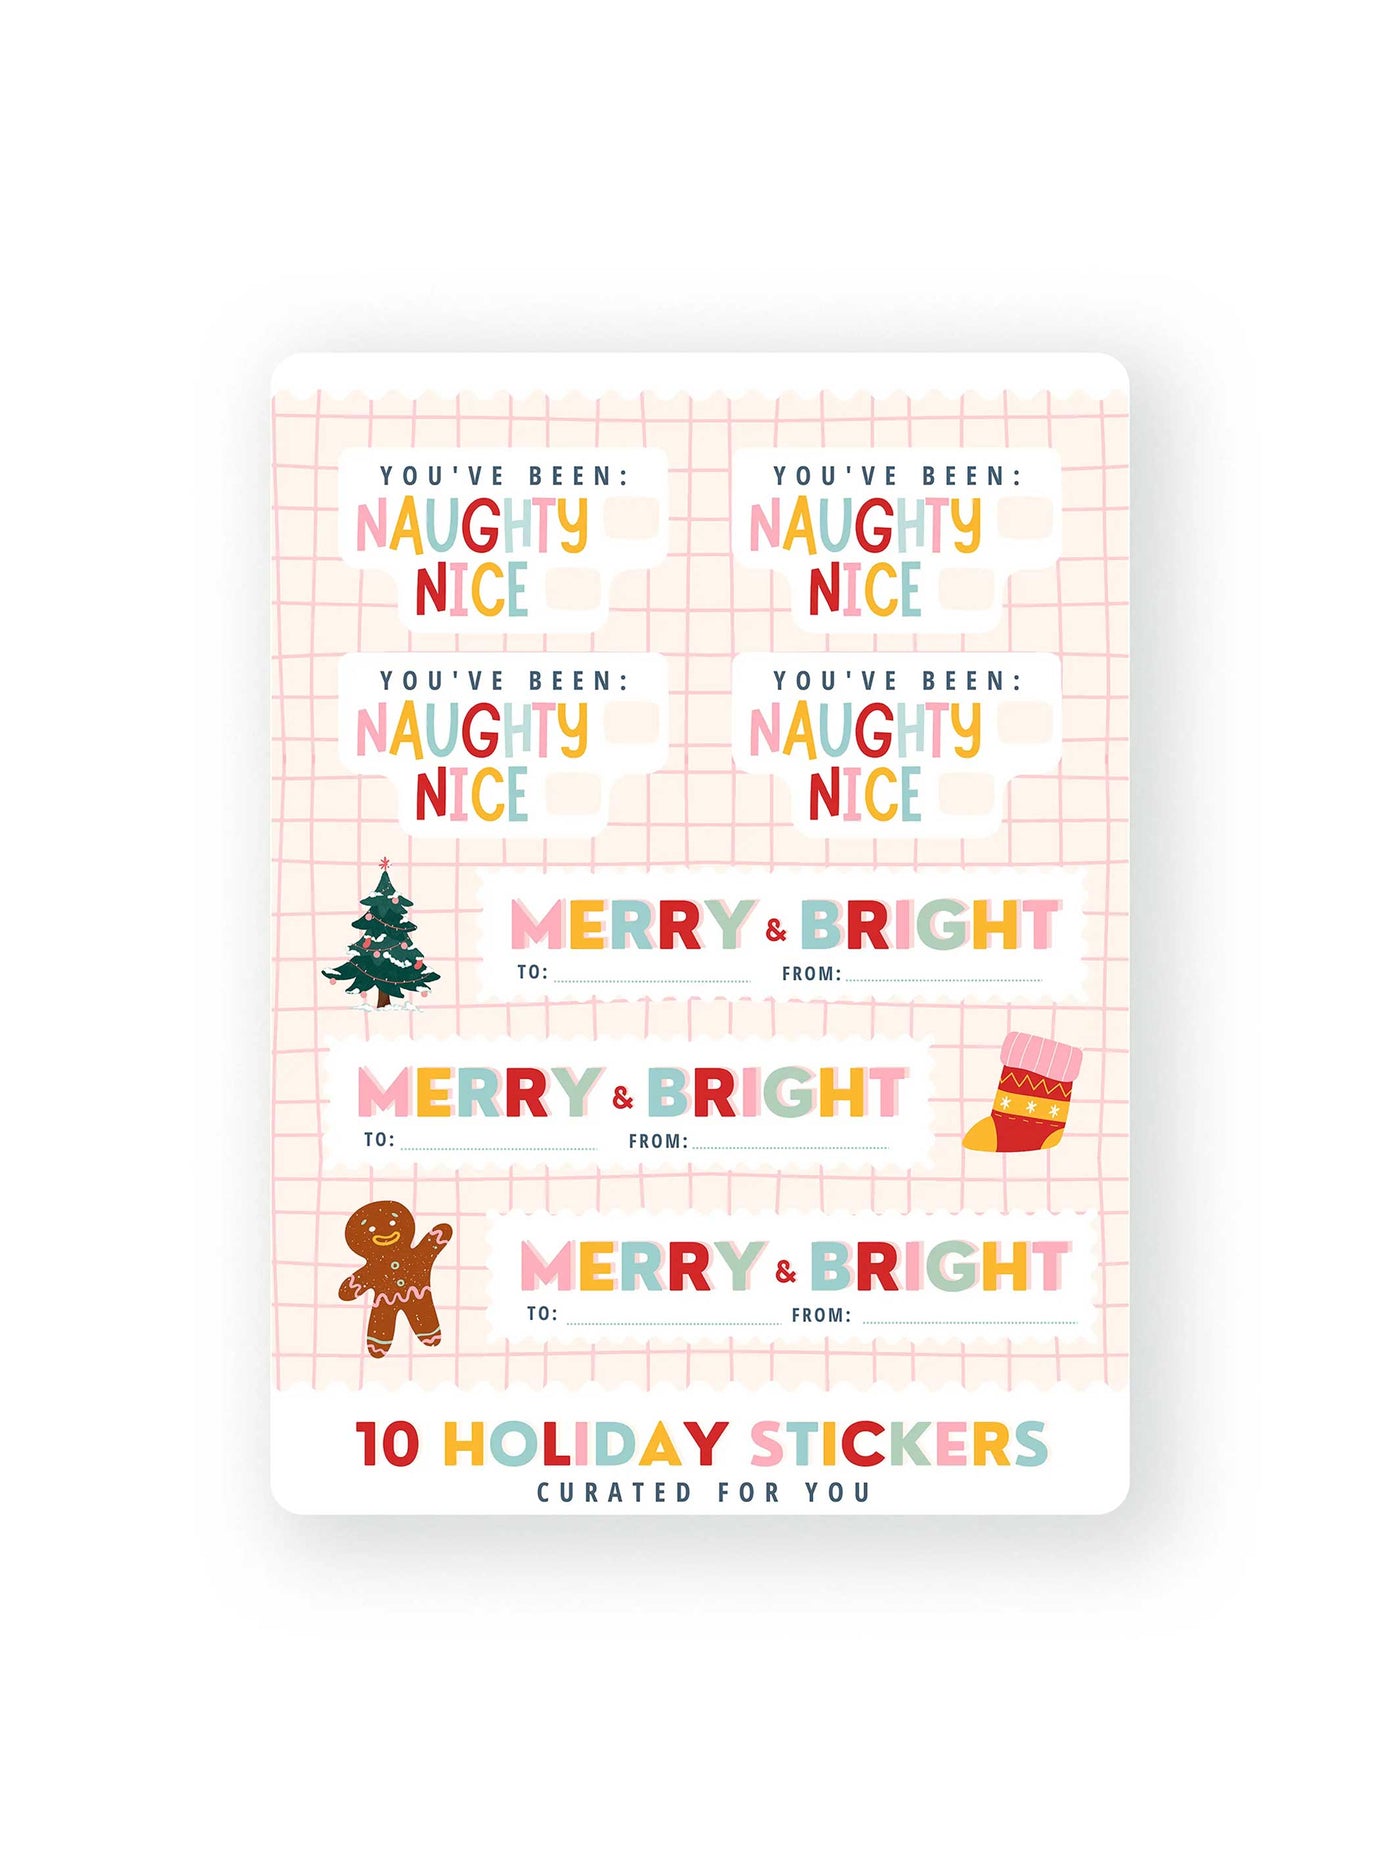 Nice or Naughty Christmas Sticker Sheet